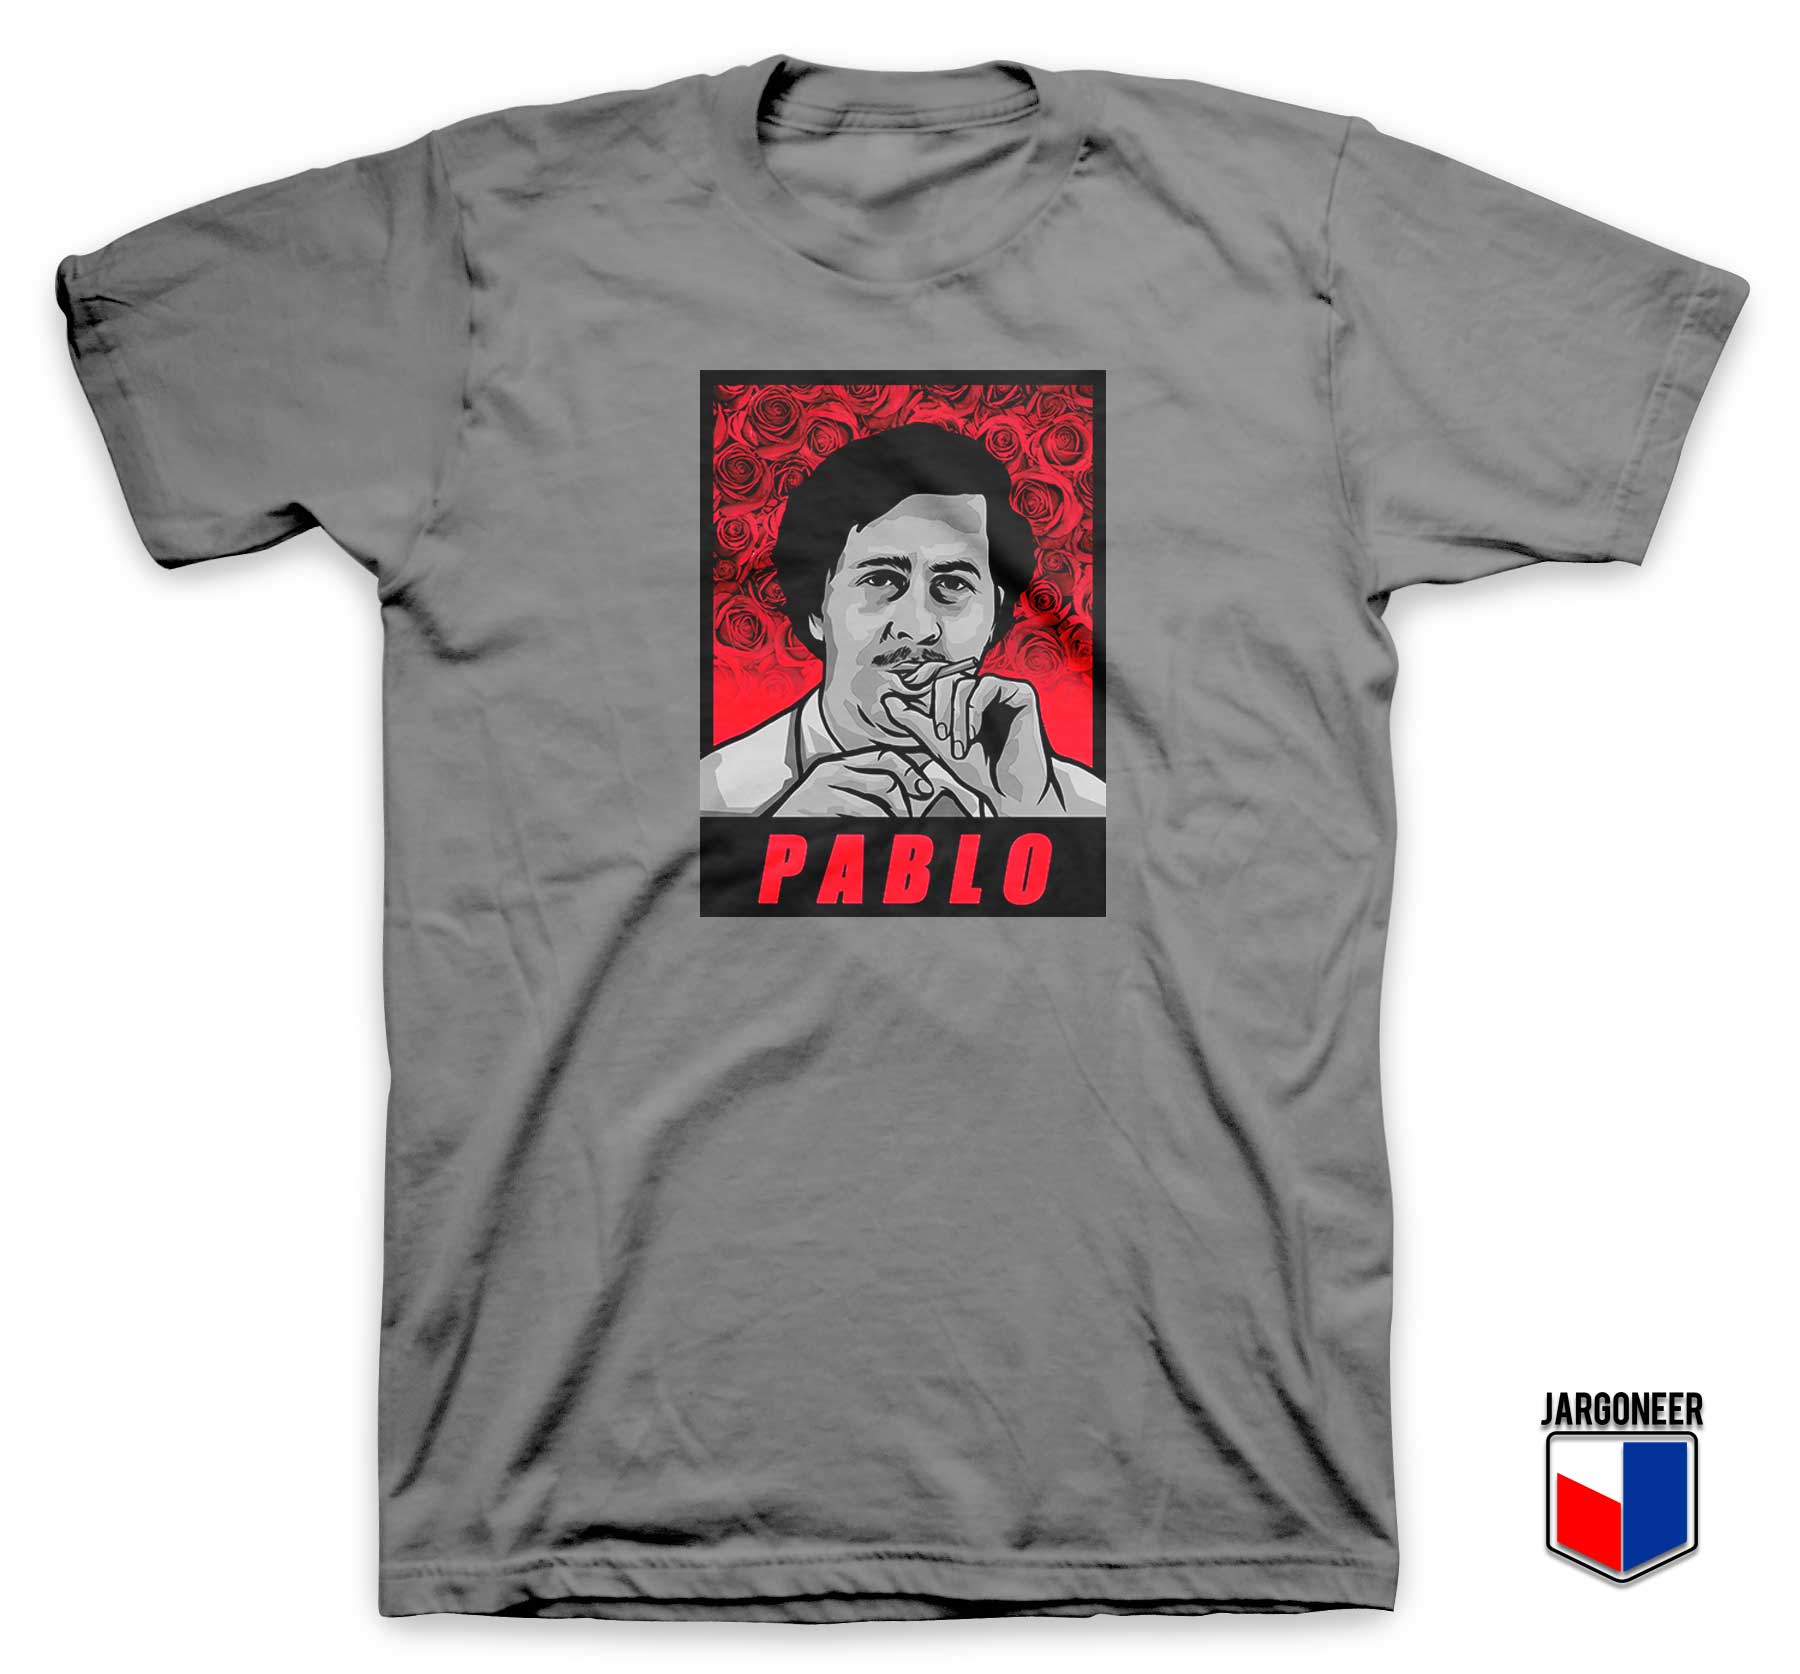 Feel Like Pablo T Shirt - Shop Unique Graphic Cool Shirt Designs